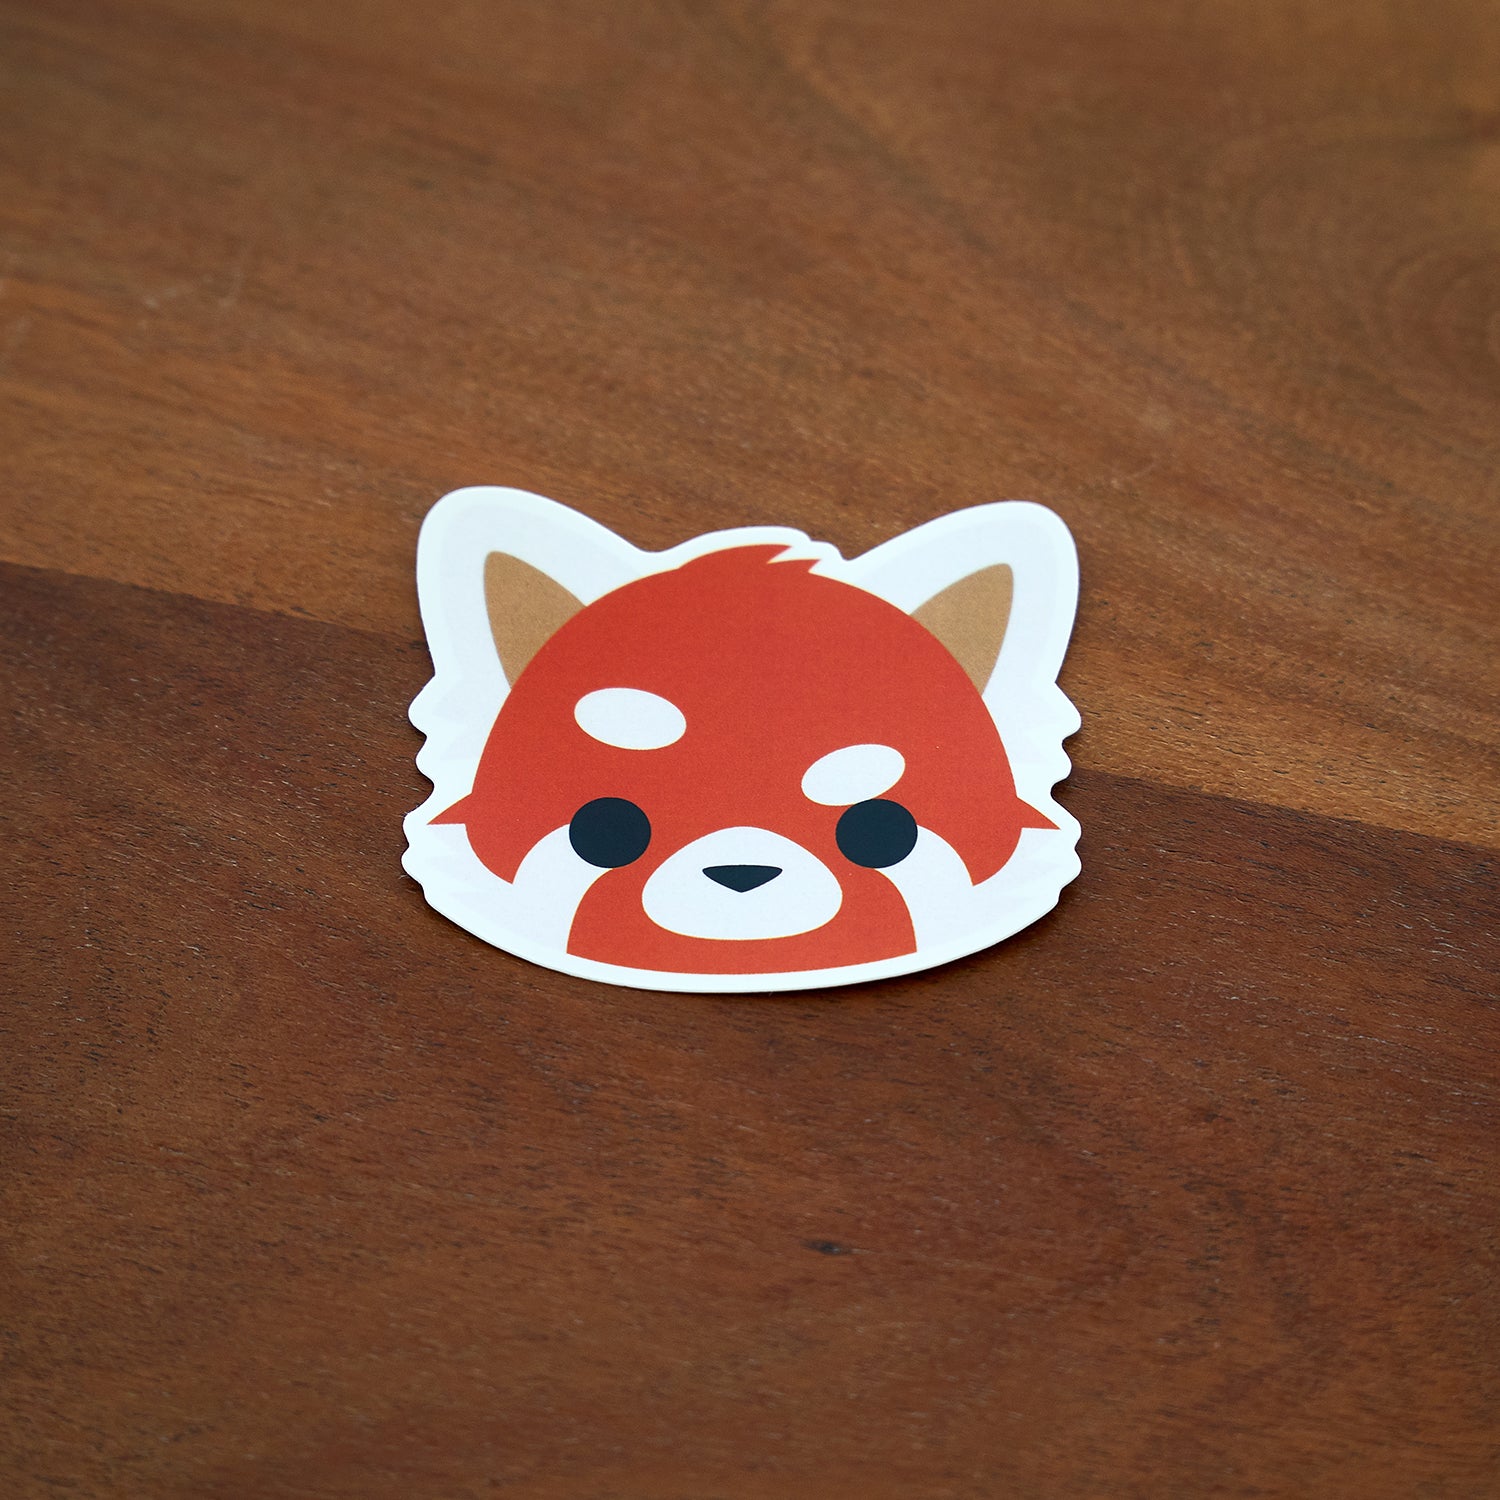 Emoji Sticker - Red Panda Raised Eyebrow